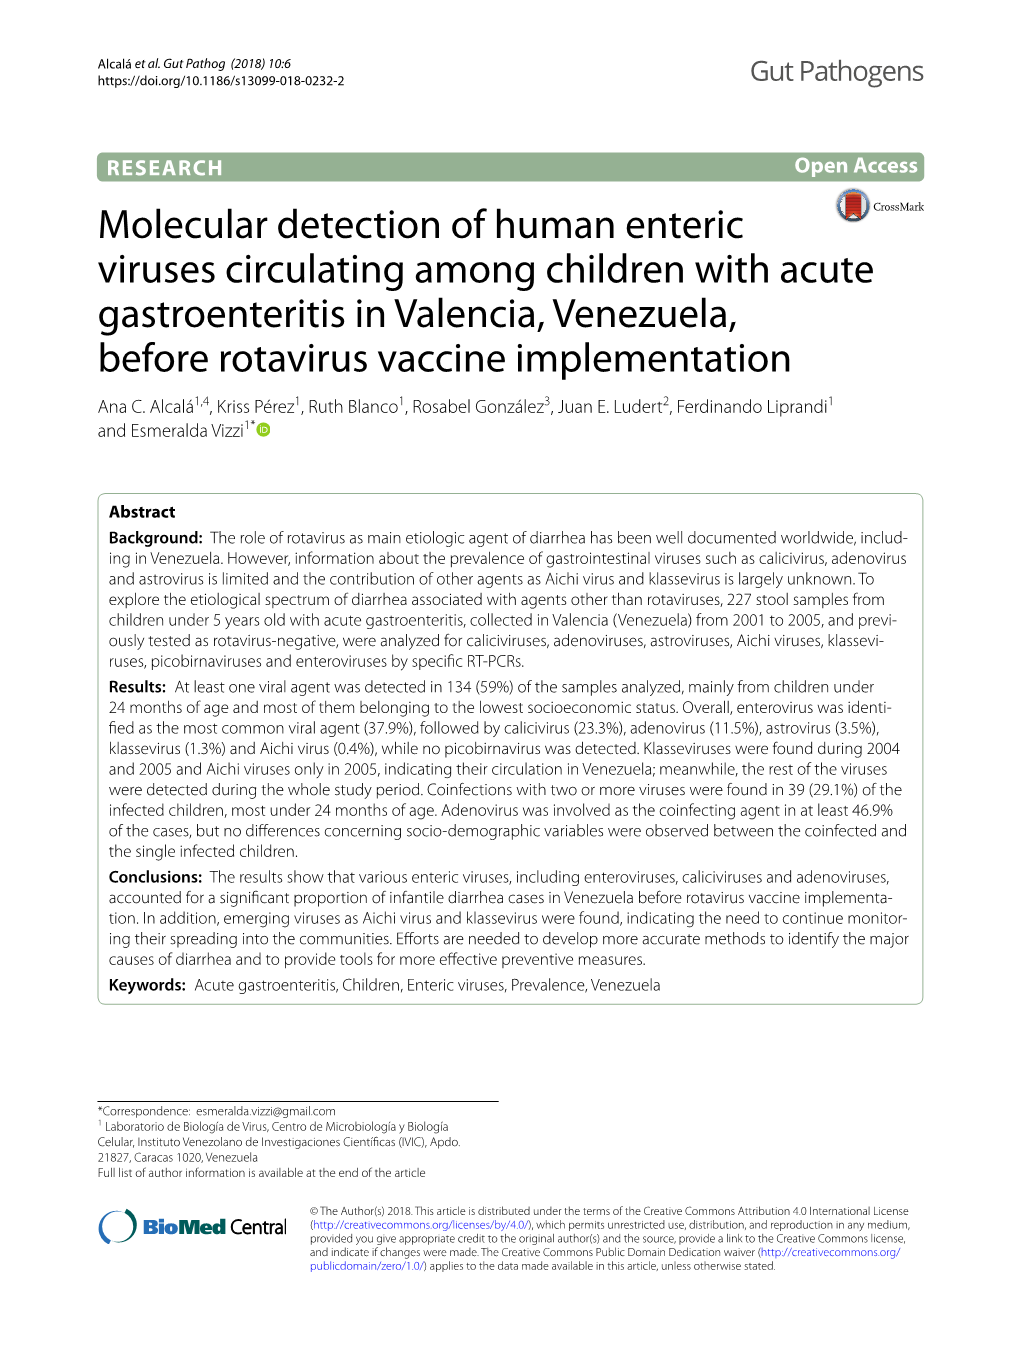 Molecular Detection of Human Enteric Viruses Circulating